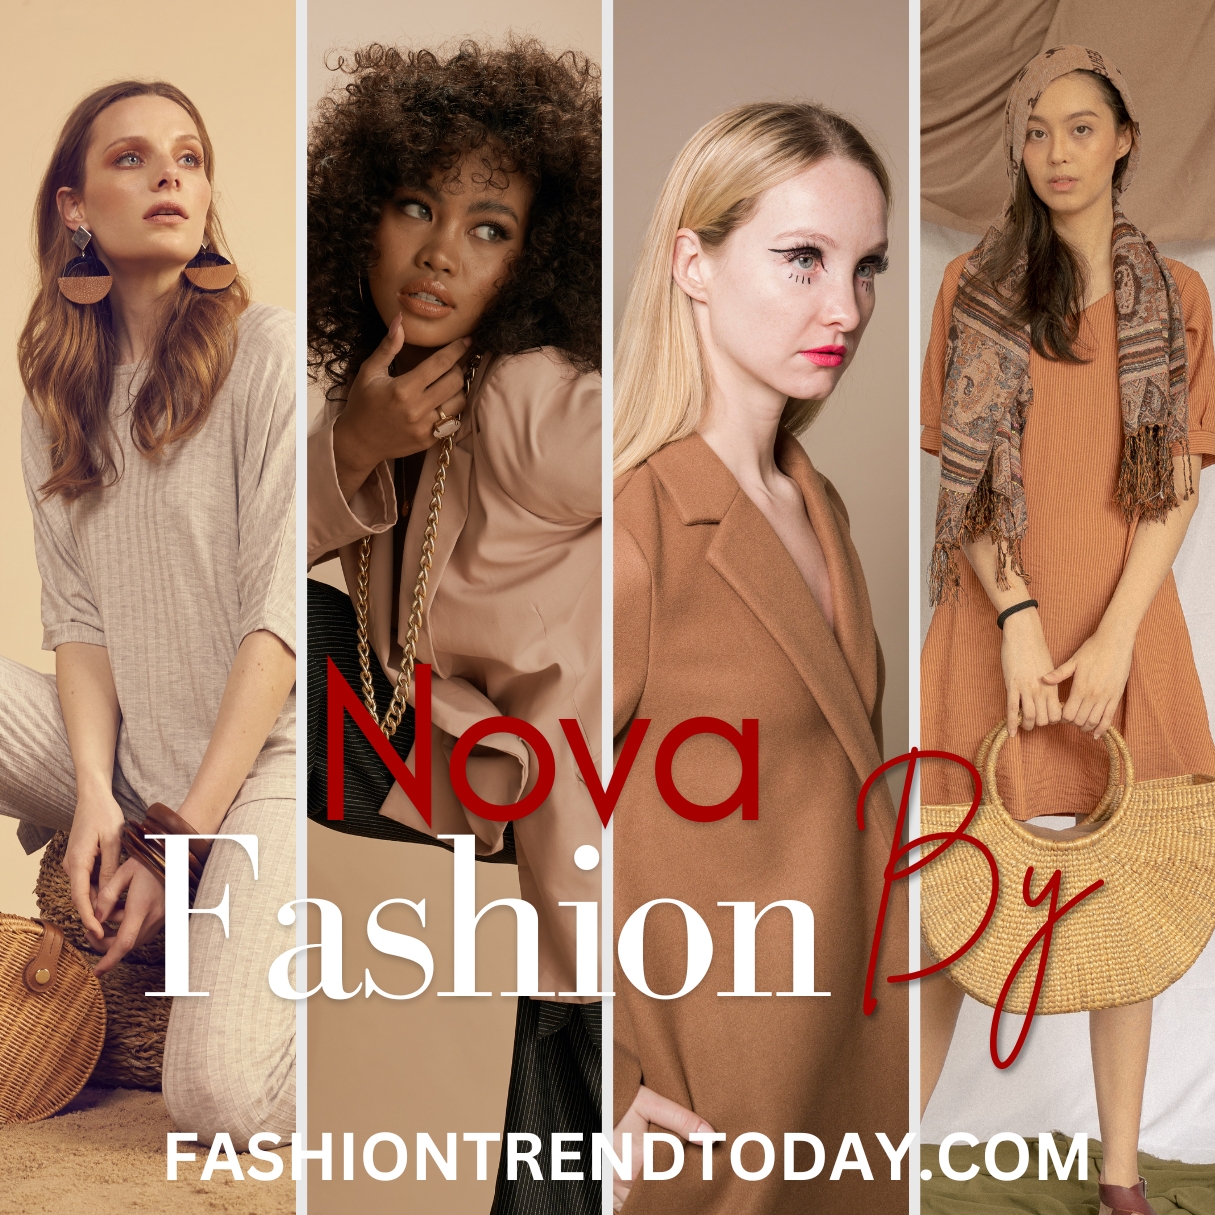 Nova Fashion: Where Dreams Dress Up